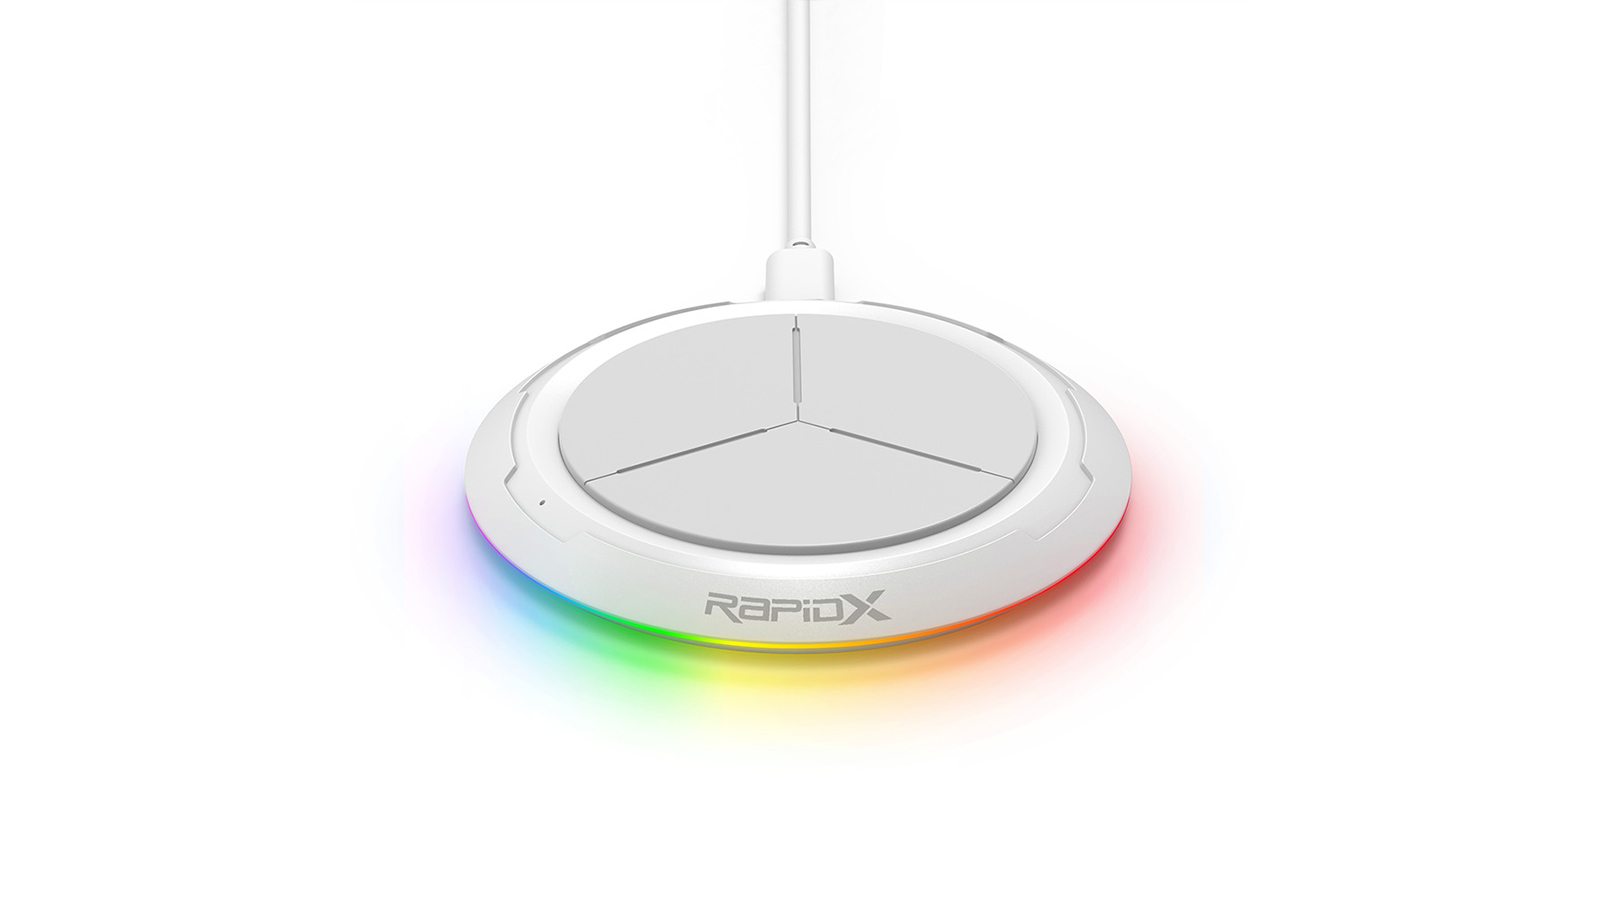 Rapidx Prismo RGB Wireless Charger